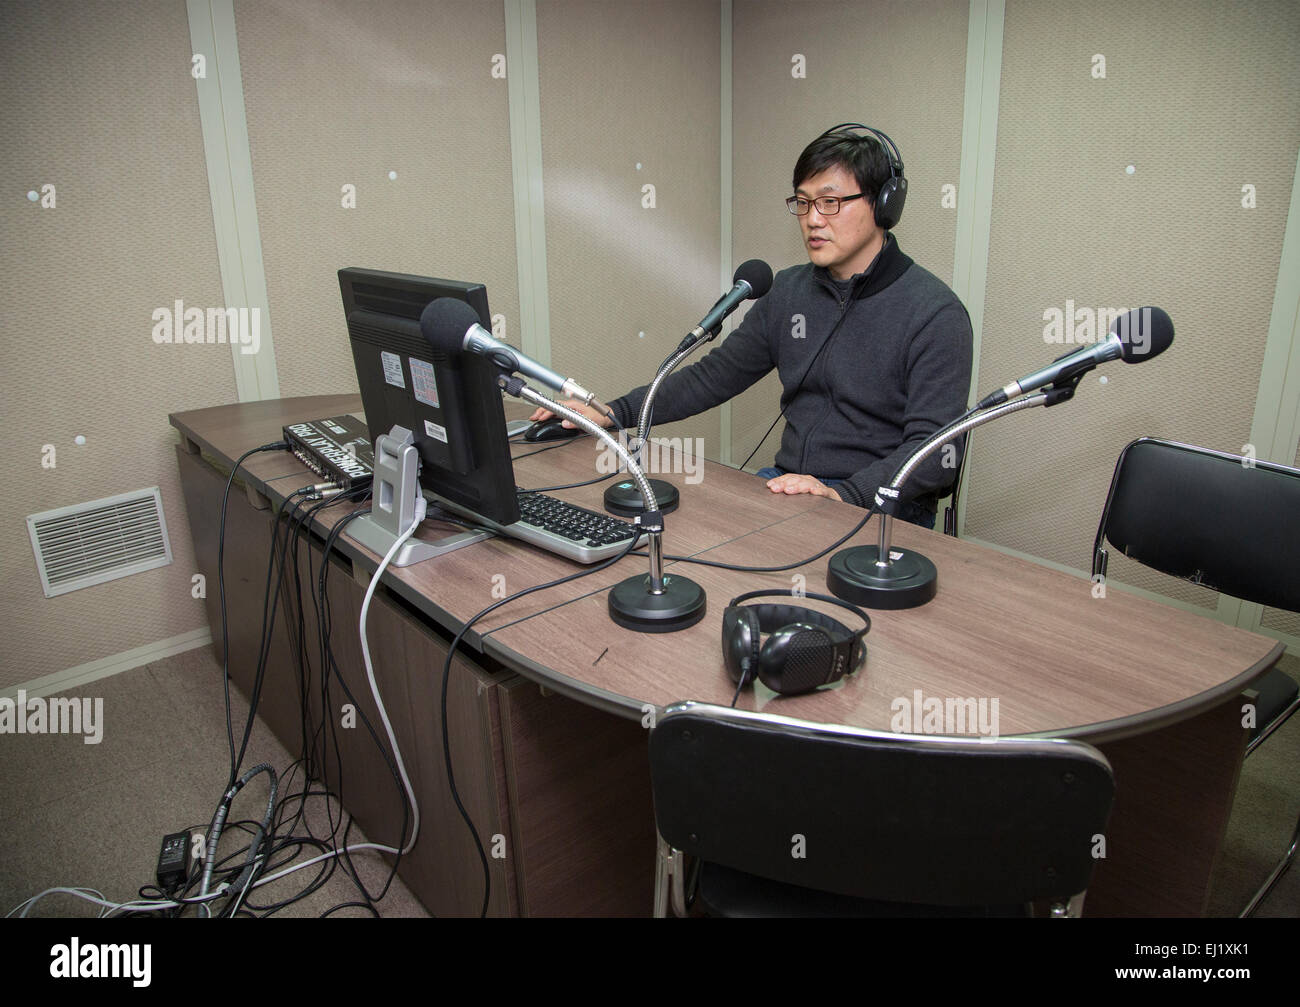 Unificación Media Group, Mar 20, 2015 : Manager Kim Seong-joong se prepara  para grabar la radiodifusión en un estudio de radio de la unificación Media  Group (UMG) en Seúl, Corea del Sur.